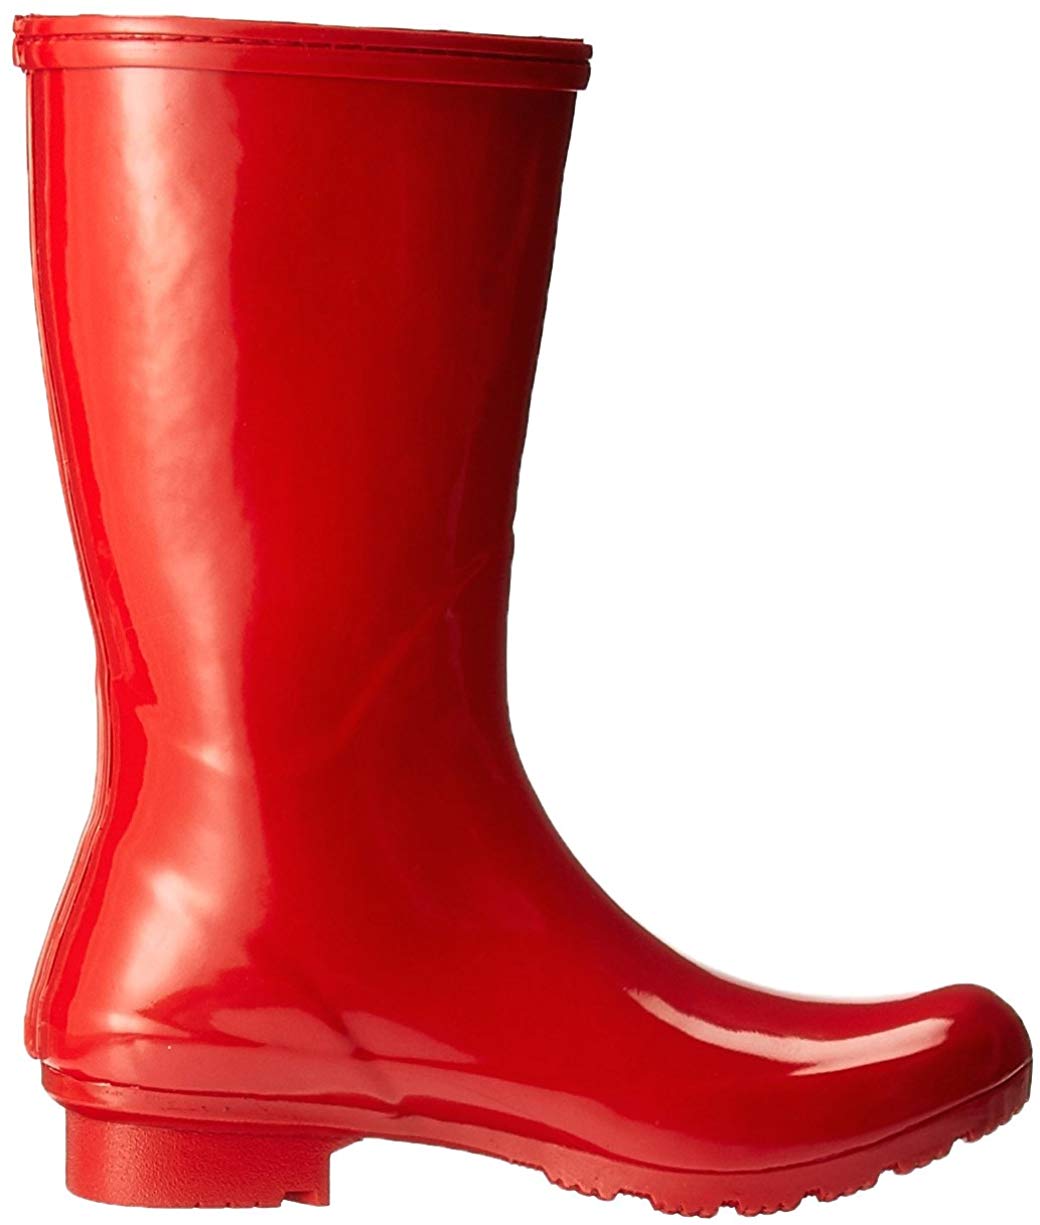 Roma Boots Women's Emma Short Rain, Red, Size 7.0 idH1 | eBay